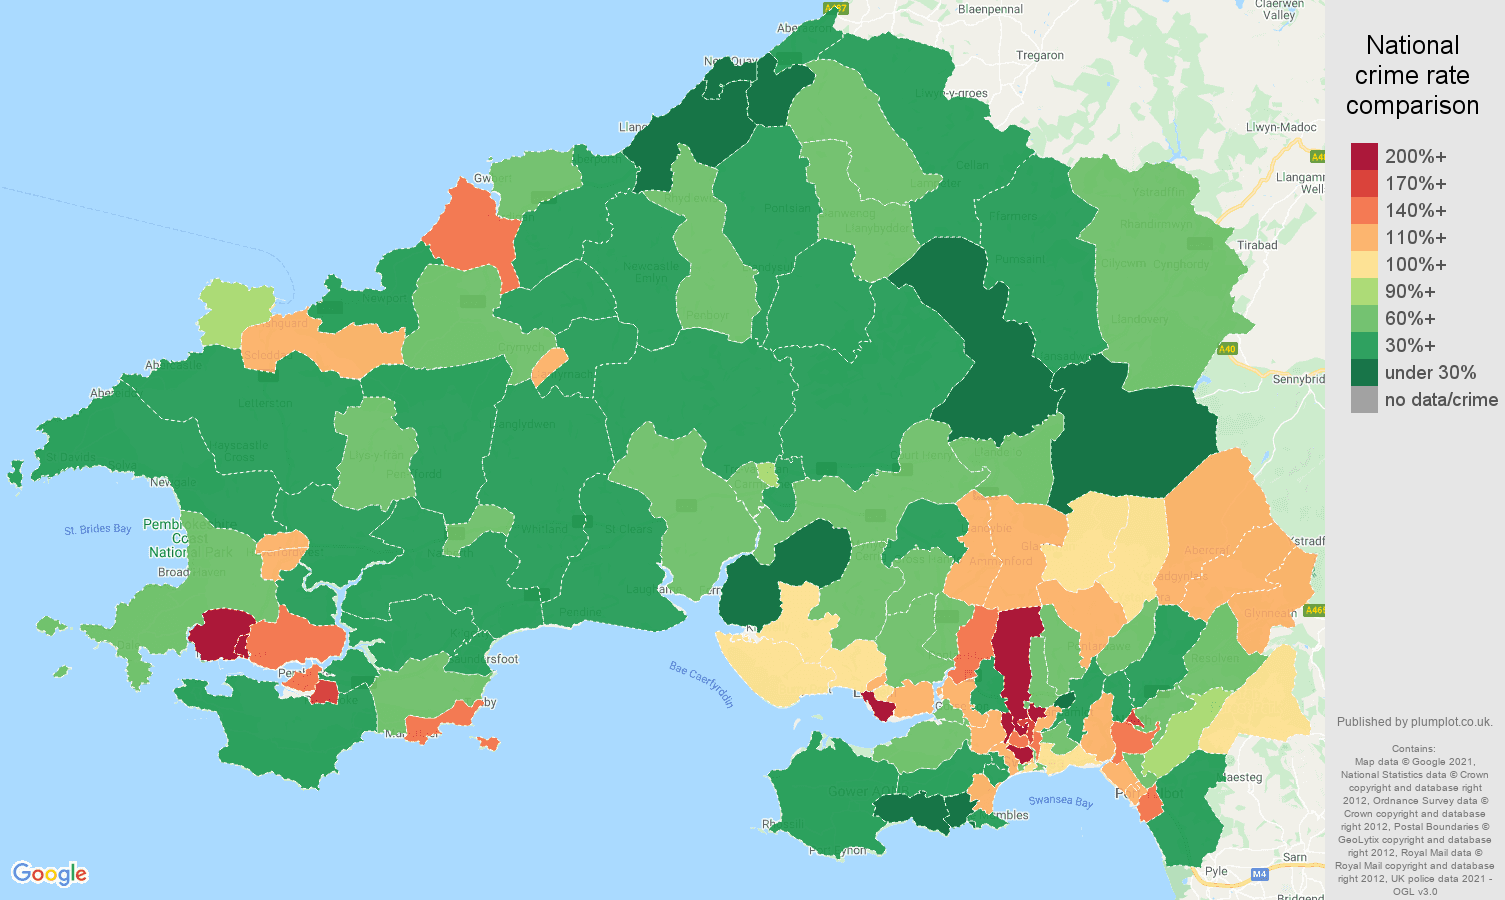 Swansea criminal damage and arson crime rate comparison map